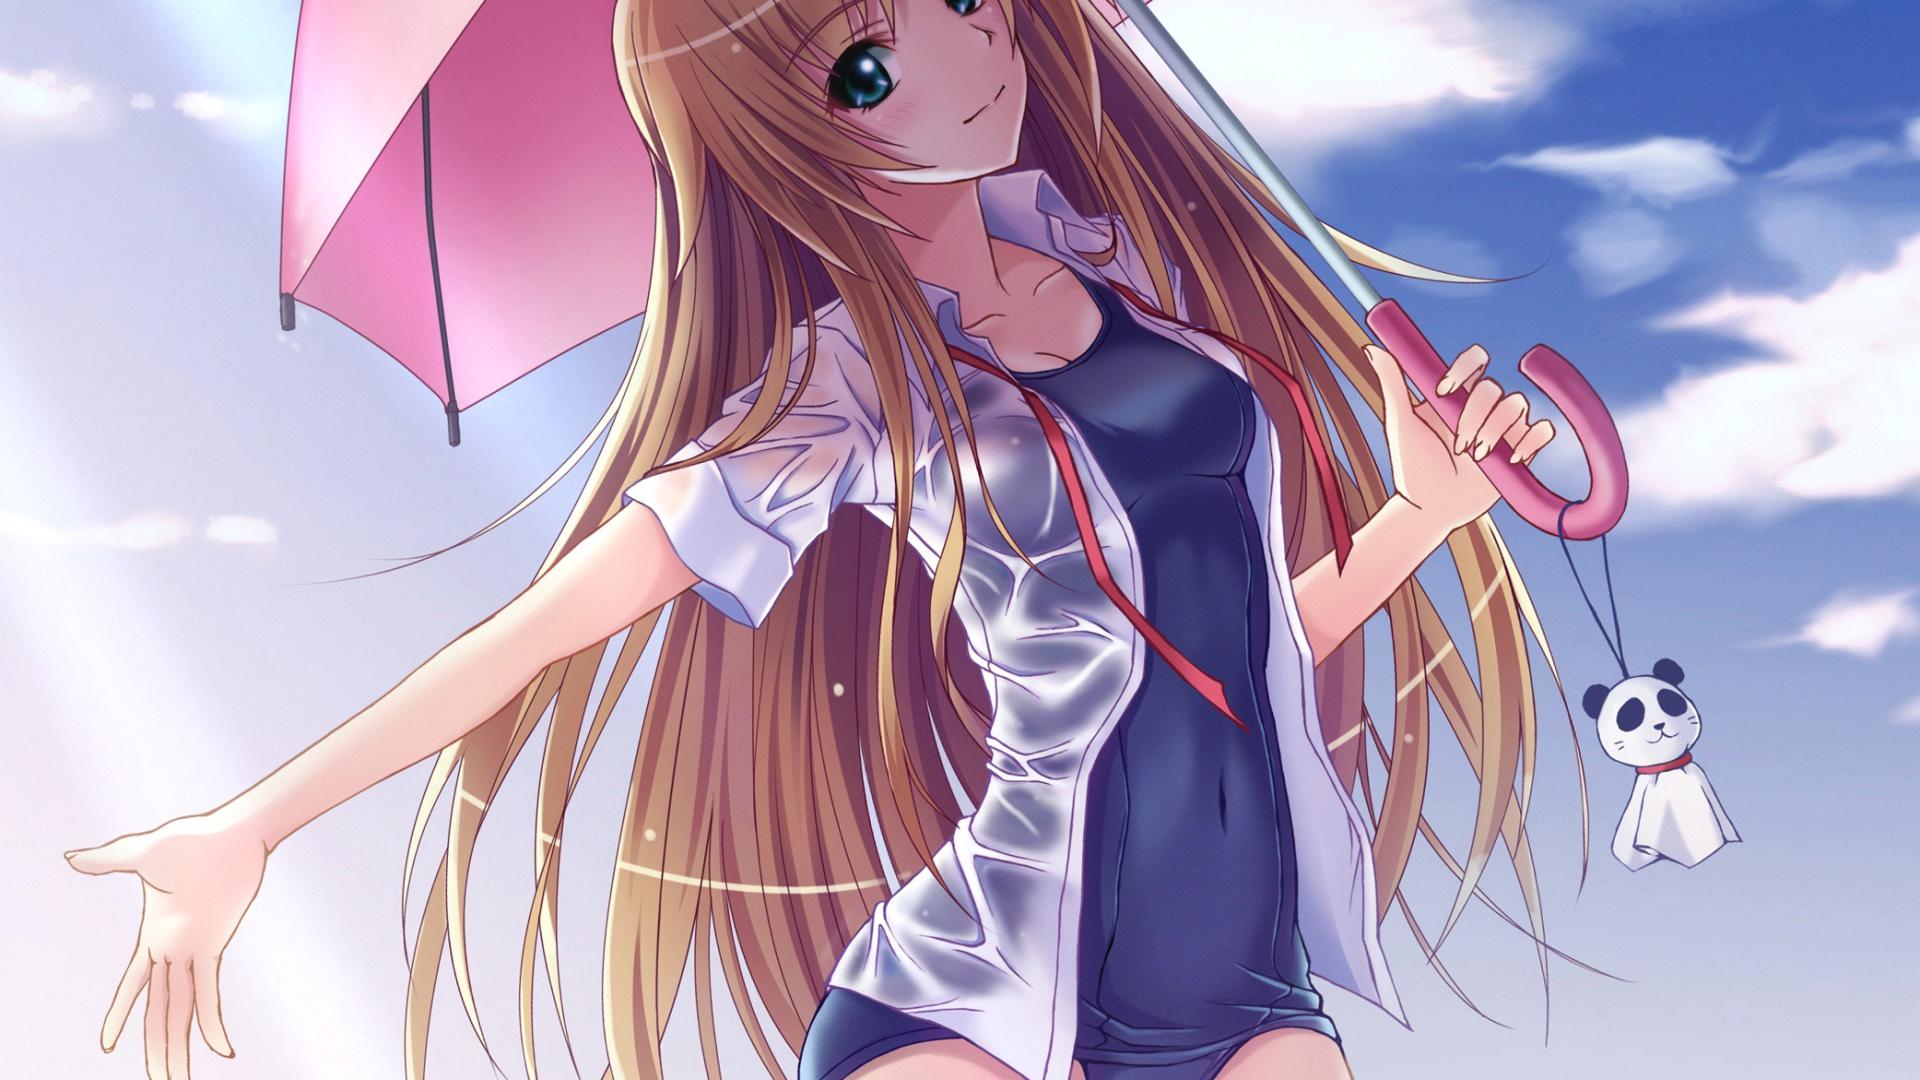 Cute Anime Girls Wallpaper full HD Free Download